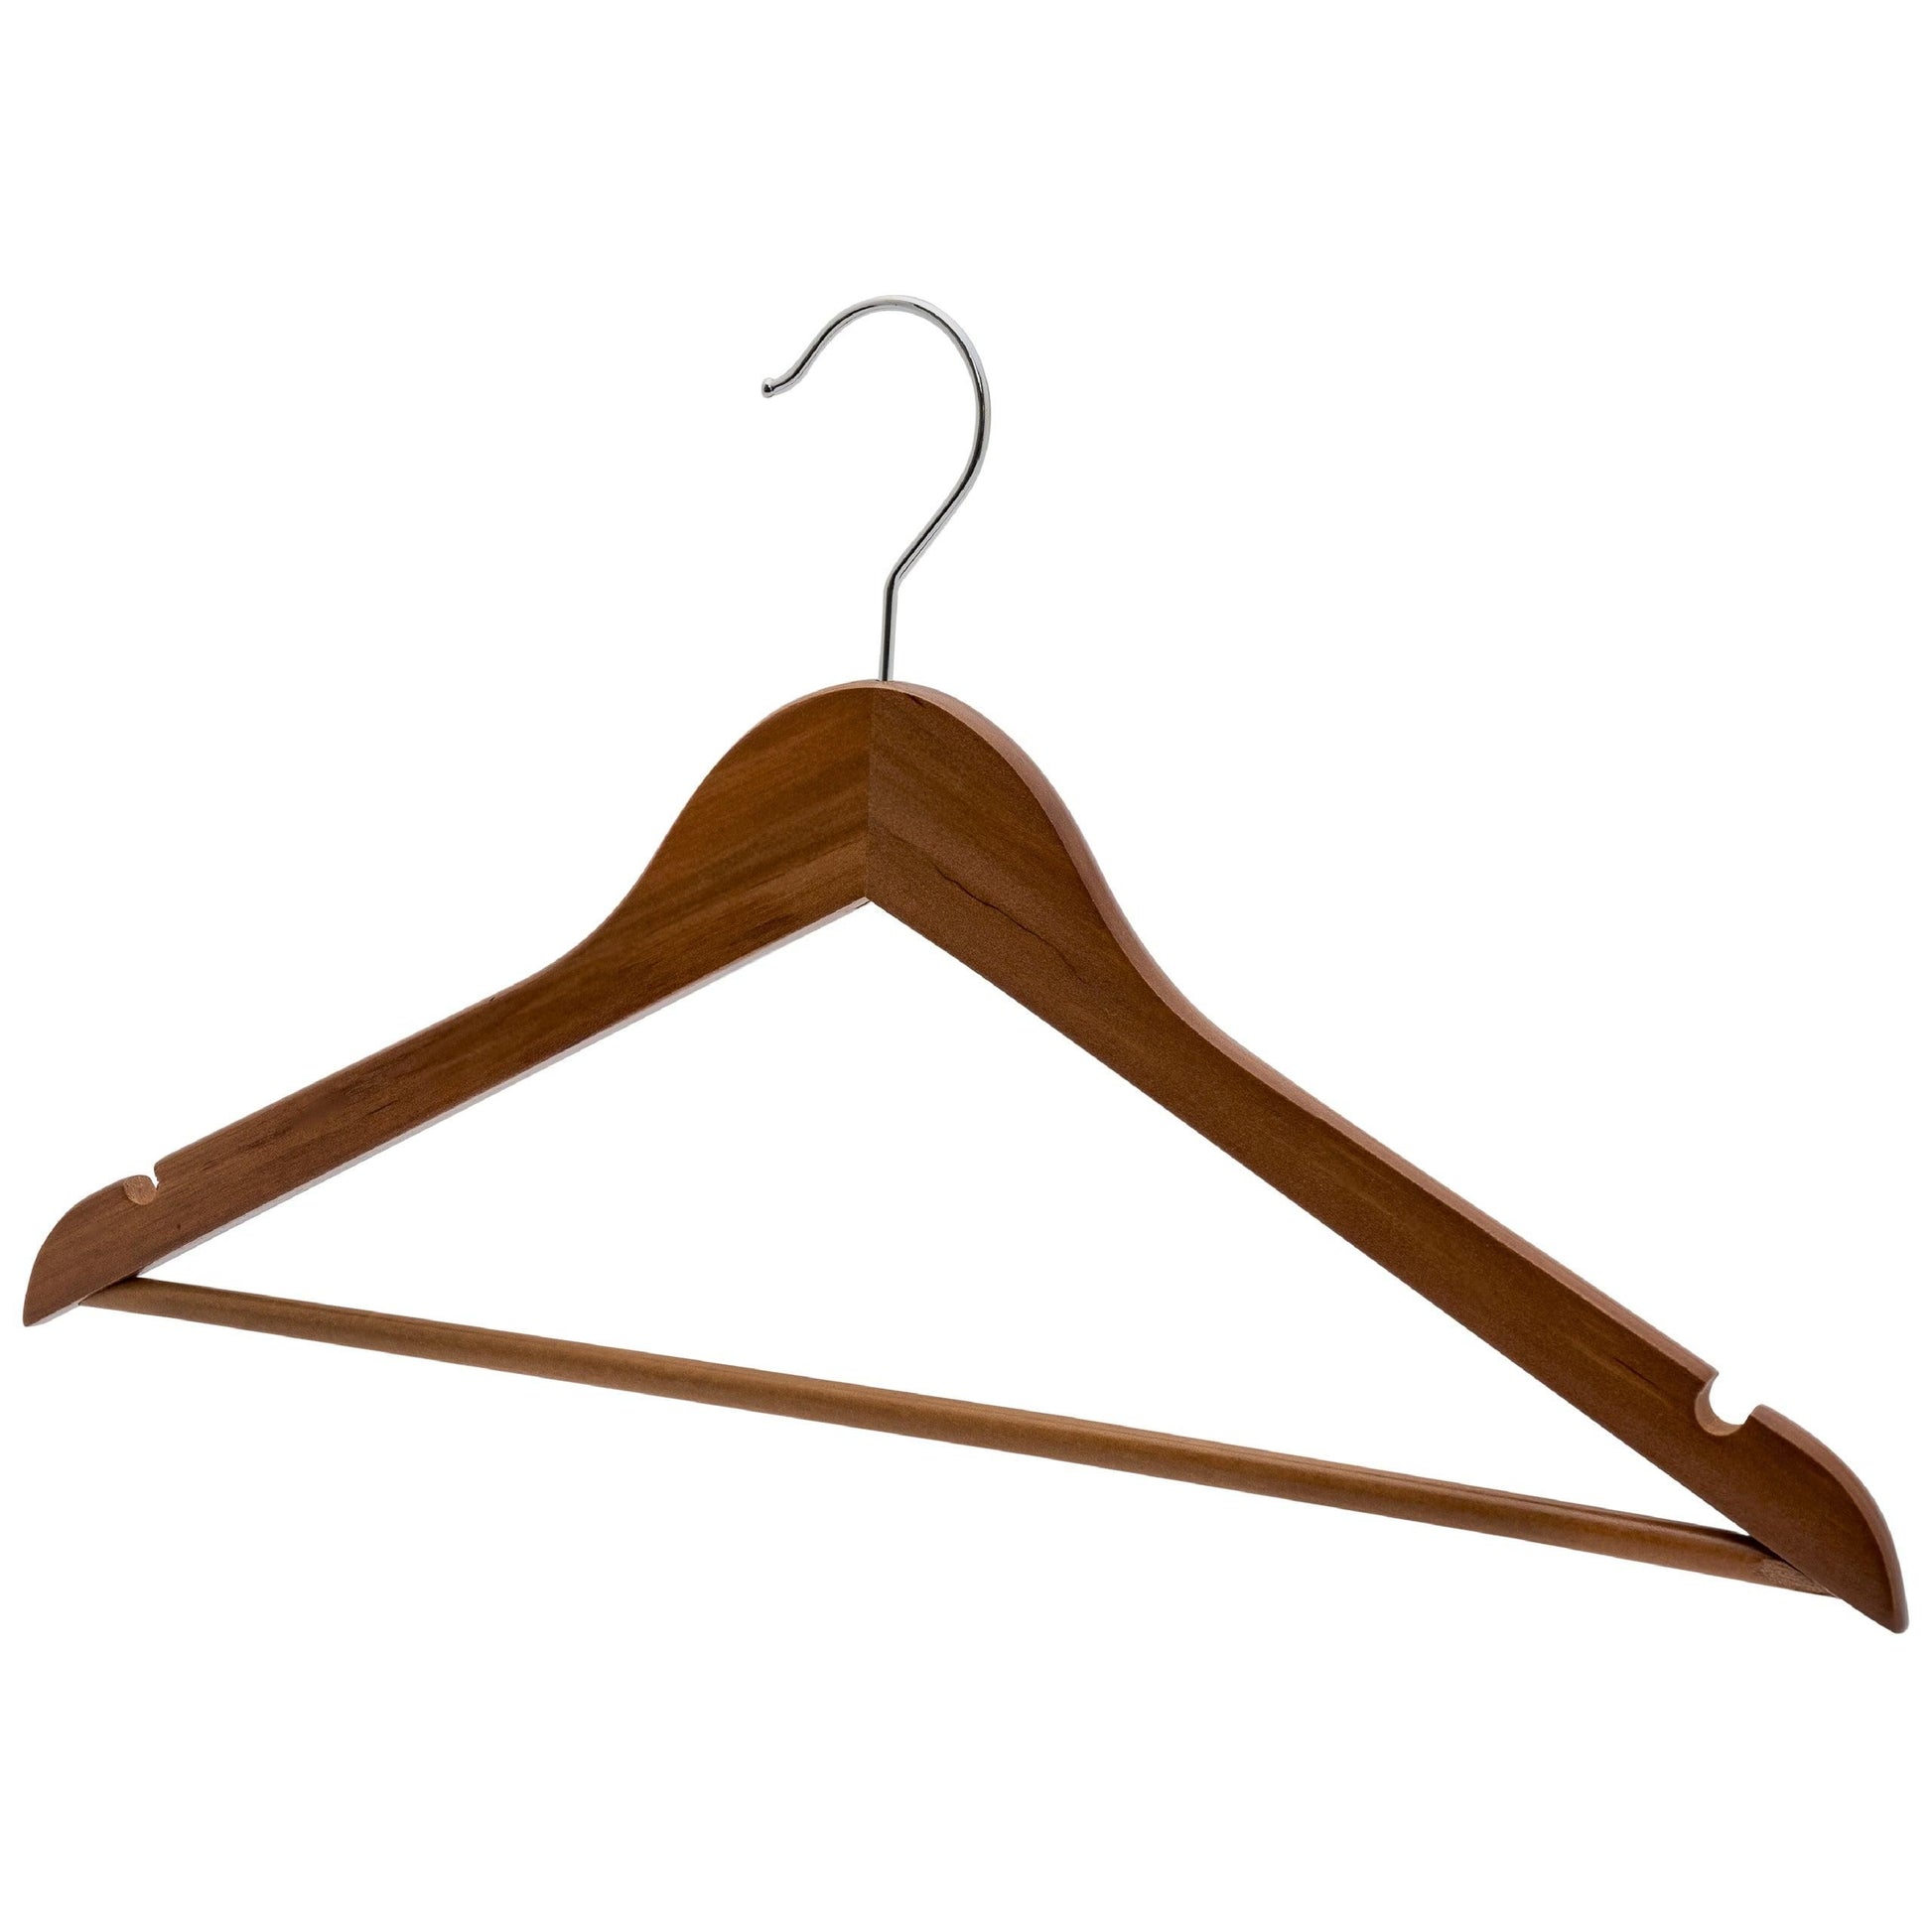 Walnut Wooden Suit Hanger w/Bar - 43cm X 12mm Thick (Sold in 25/50/100) - Hangersforless